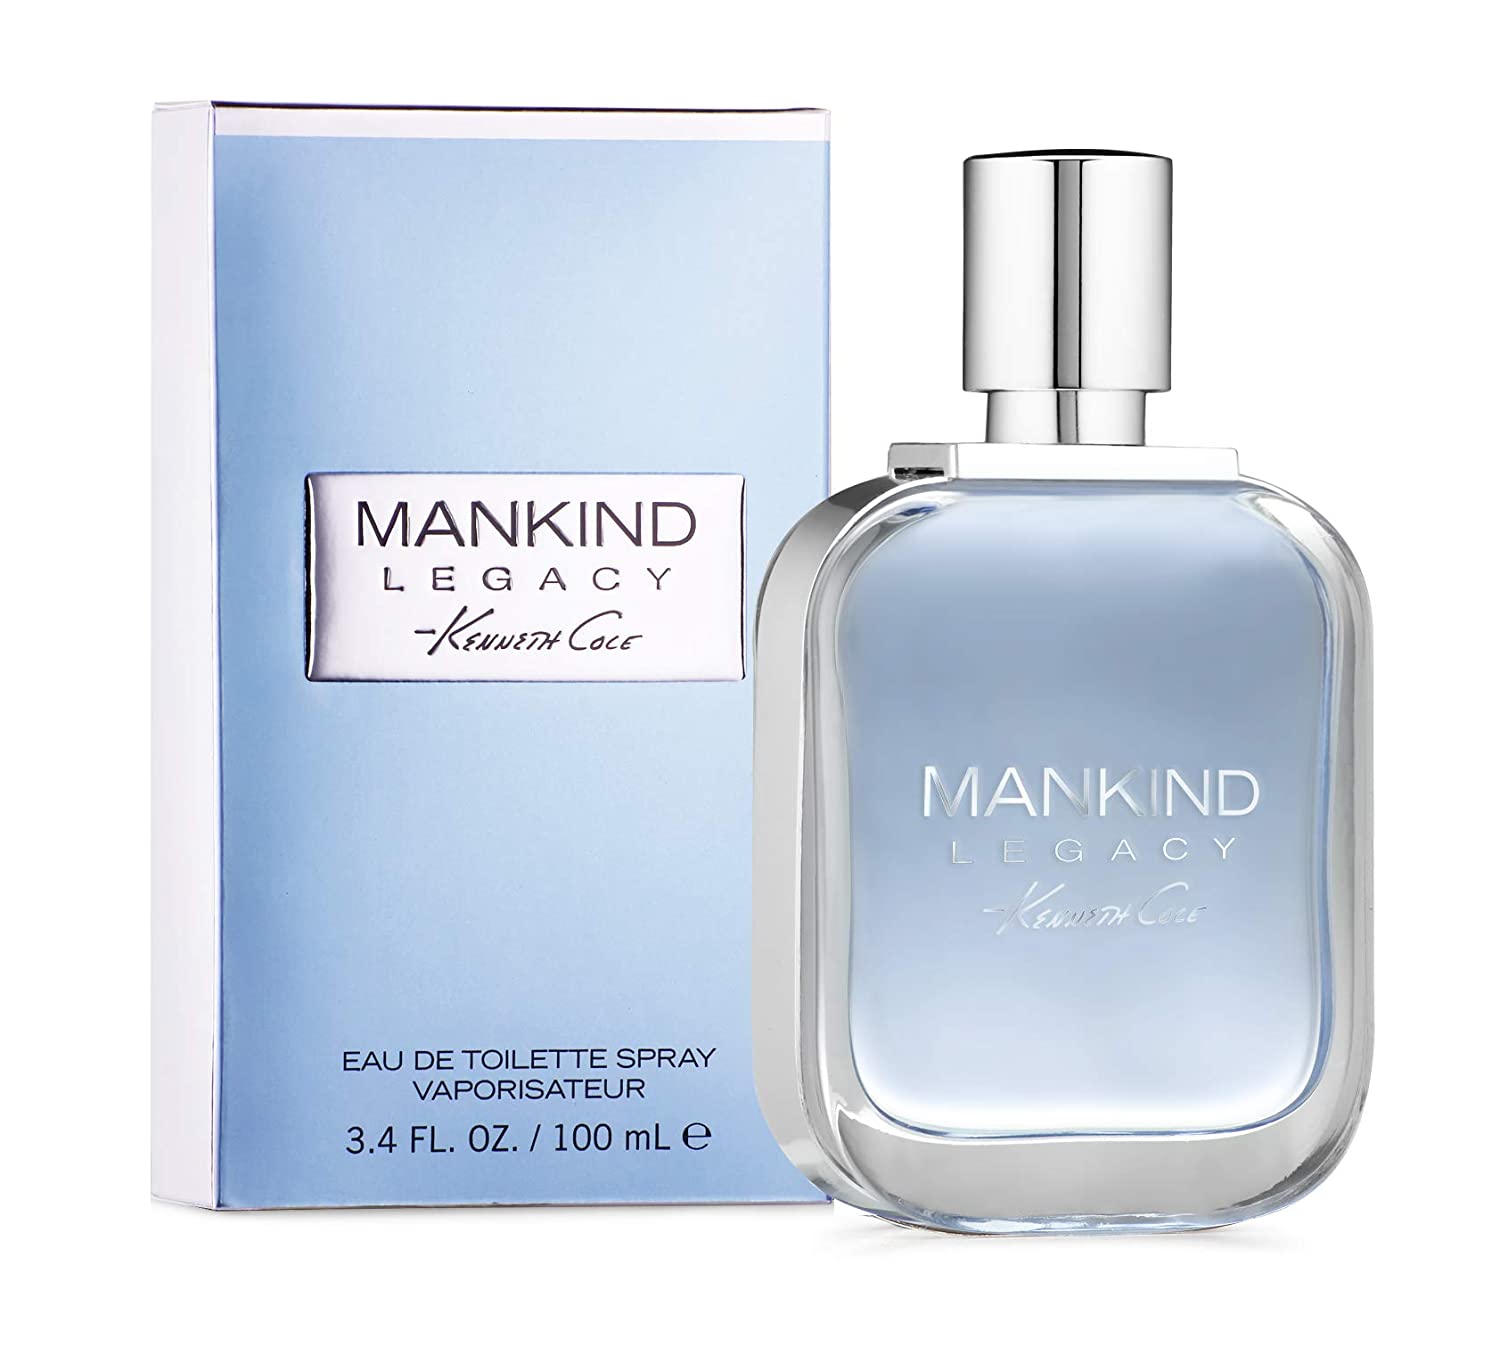 Mankind Legacy Eau de Toilette Spray for Men by Kenneth Cole, Product image 1